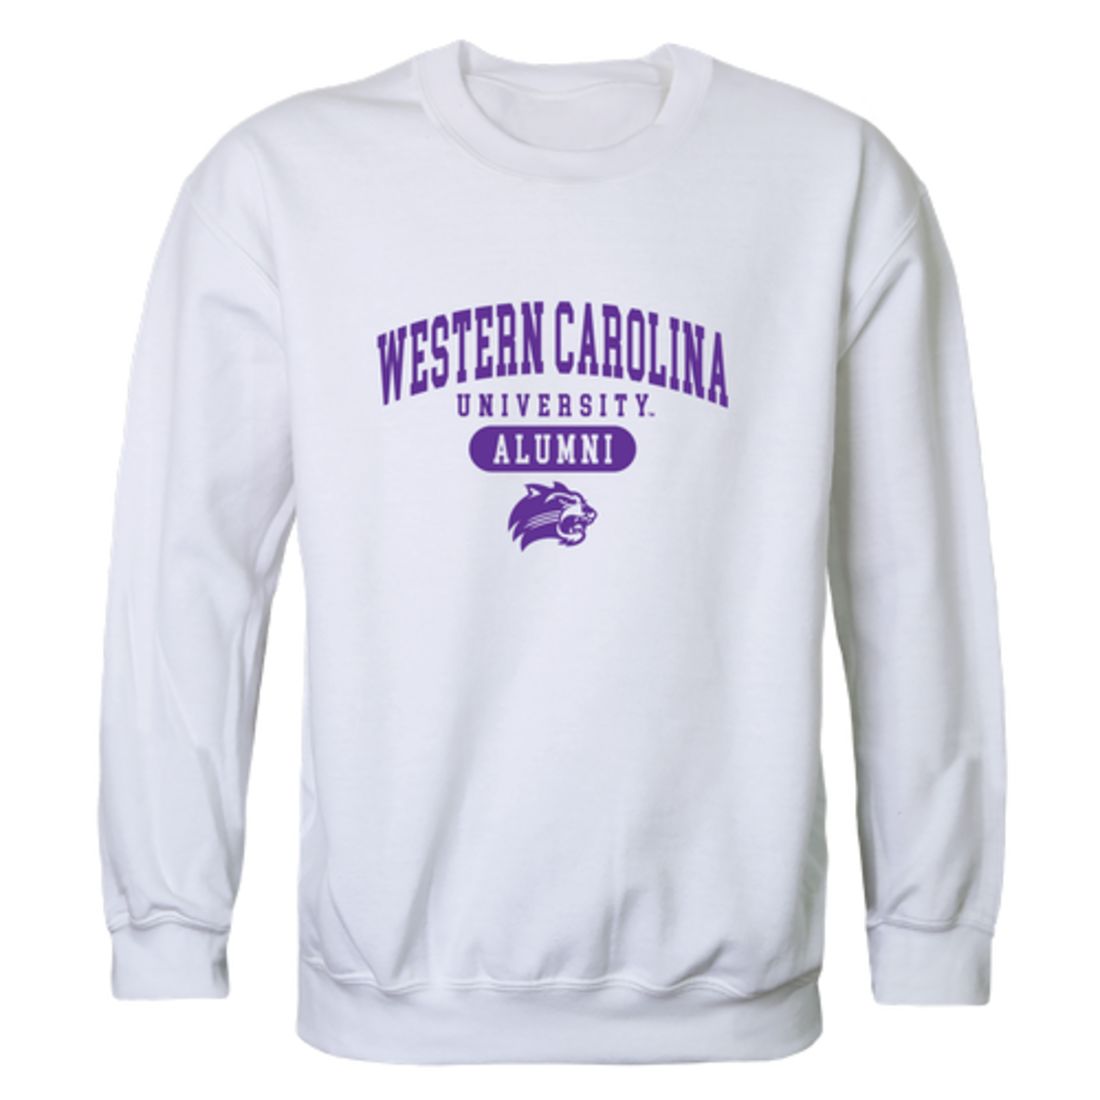 WCU Western Carolina University Catamounts Alumni Fleece Crewneck Pullover Sweatshirt Heather Charcoal-Campus-Wardrobe